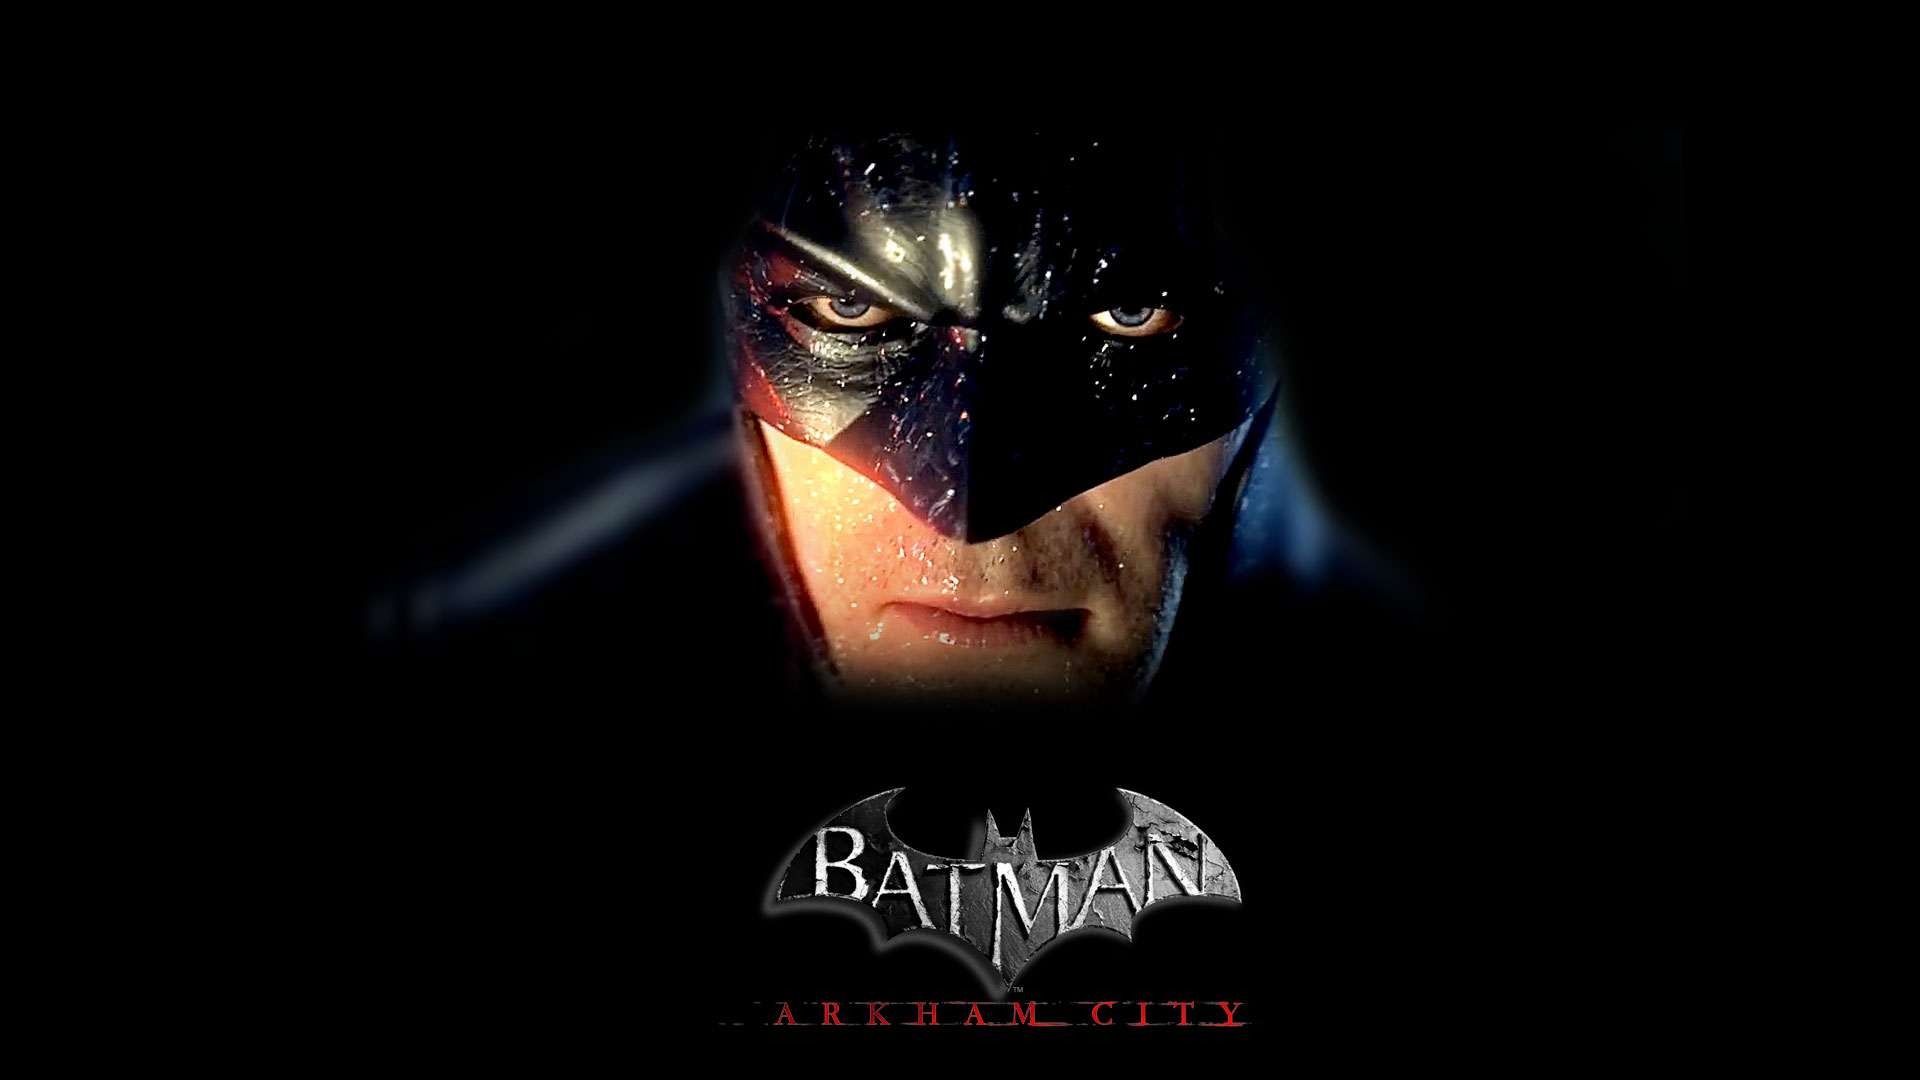 City Arkham Batman Wallpaper High Gallery Image